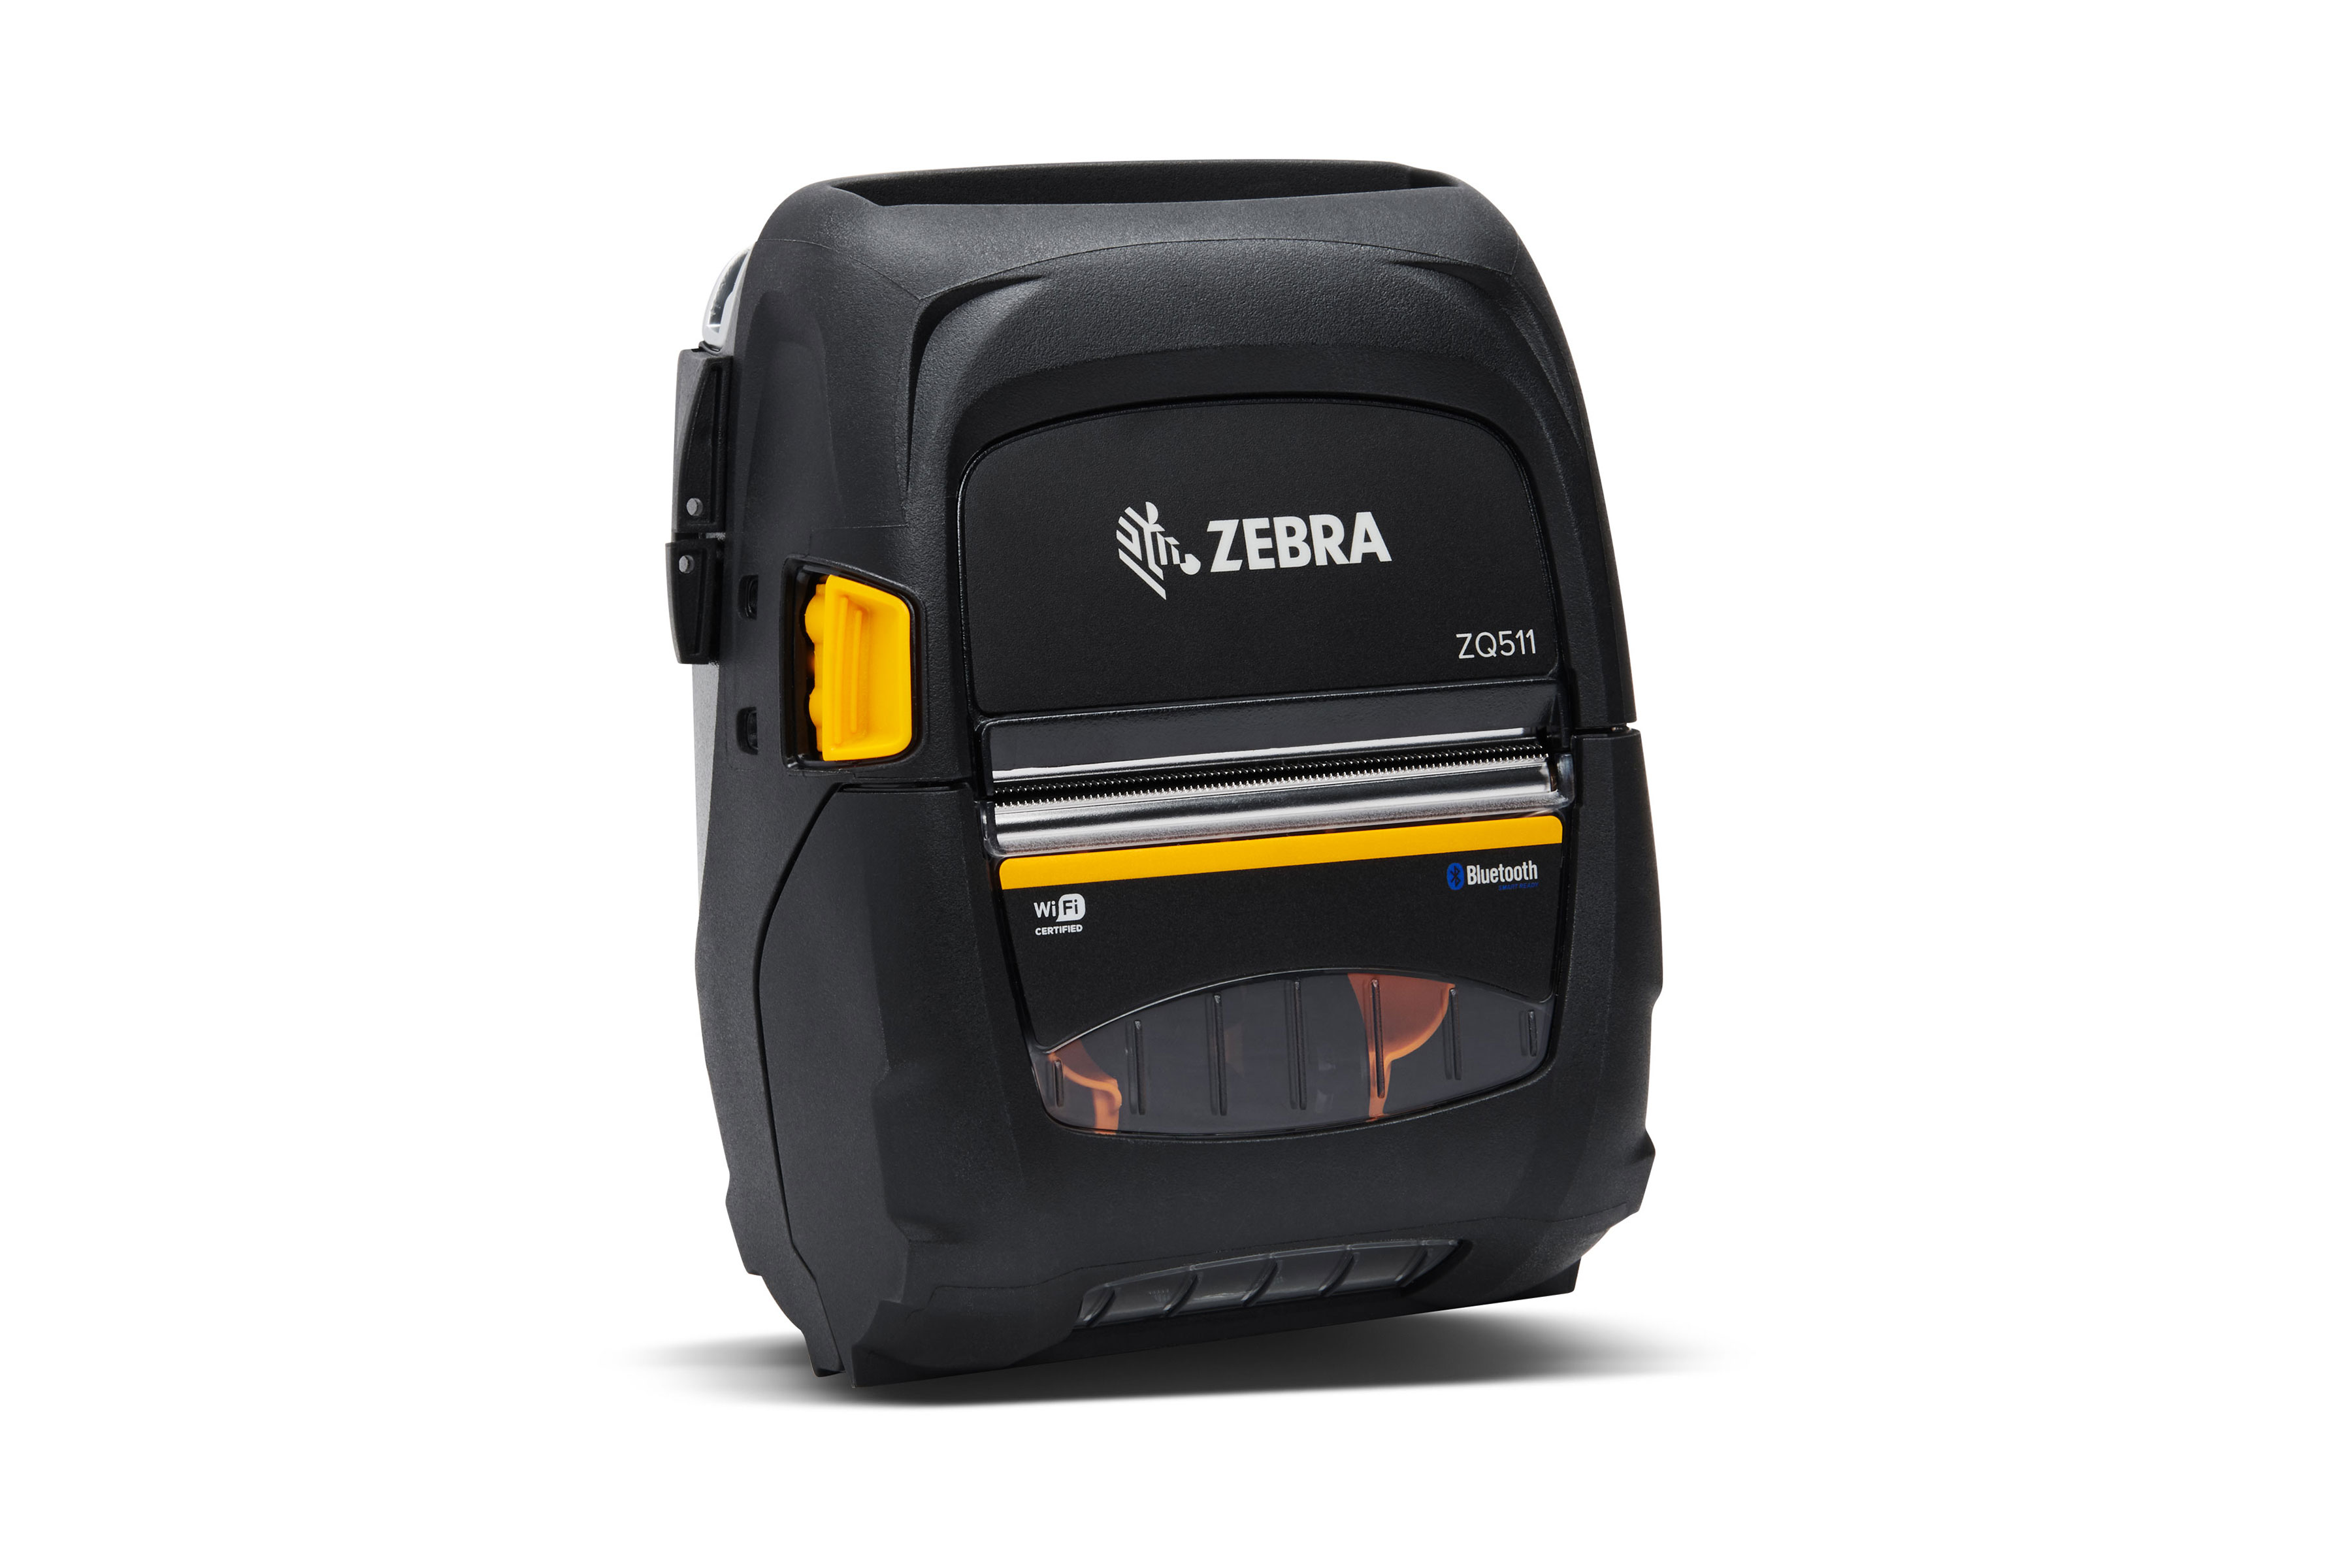 Zebra ZQ500 Series Mobile Printers